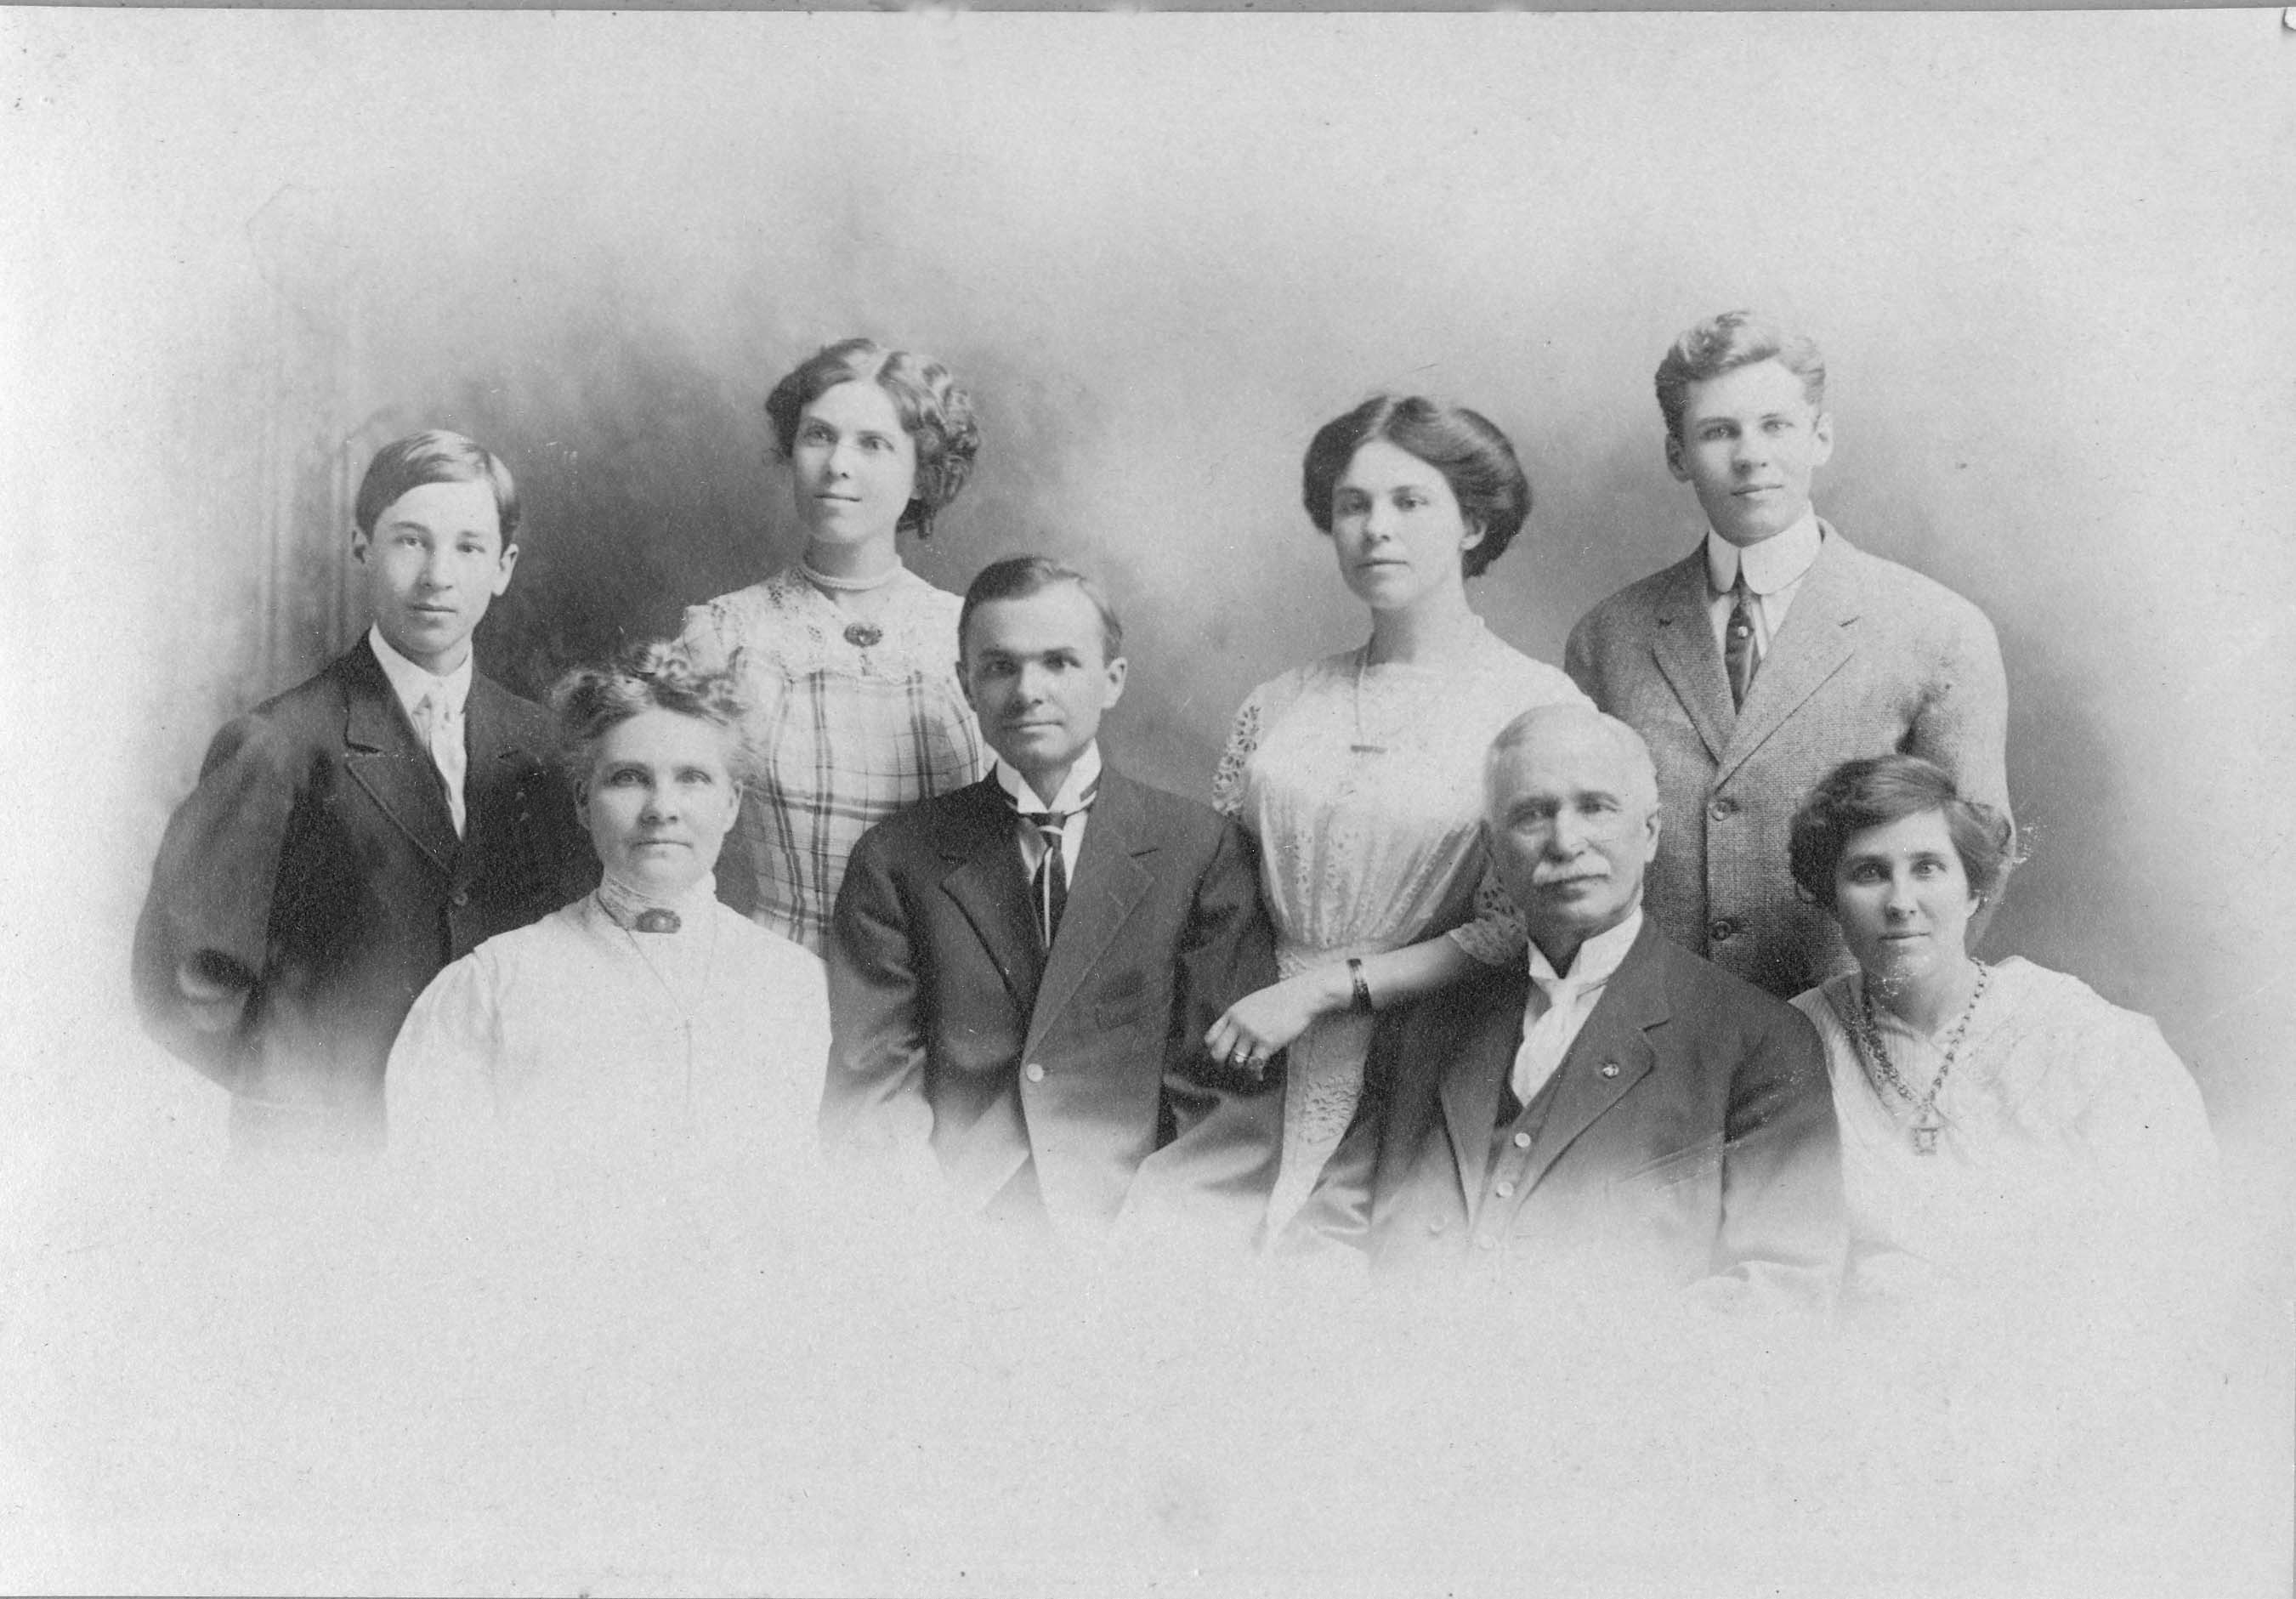 Pjhoebe Adelaide Brown Snyder and Family 1911 in SLC, Utah